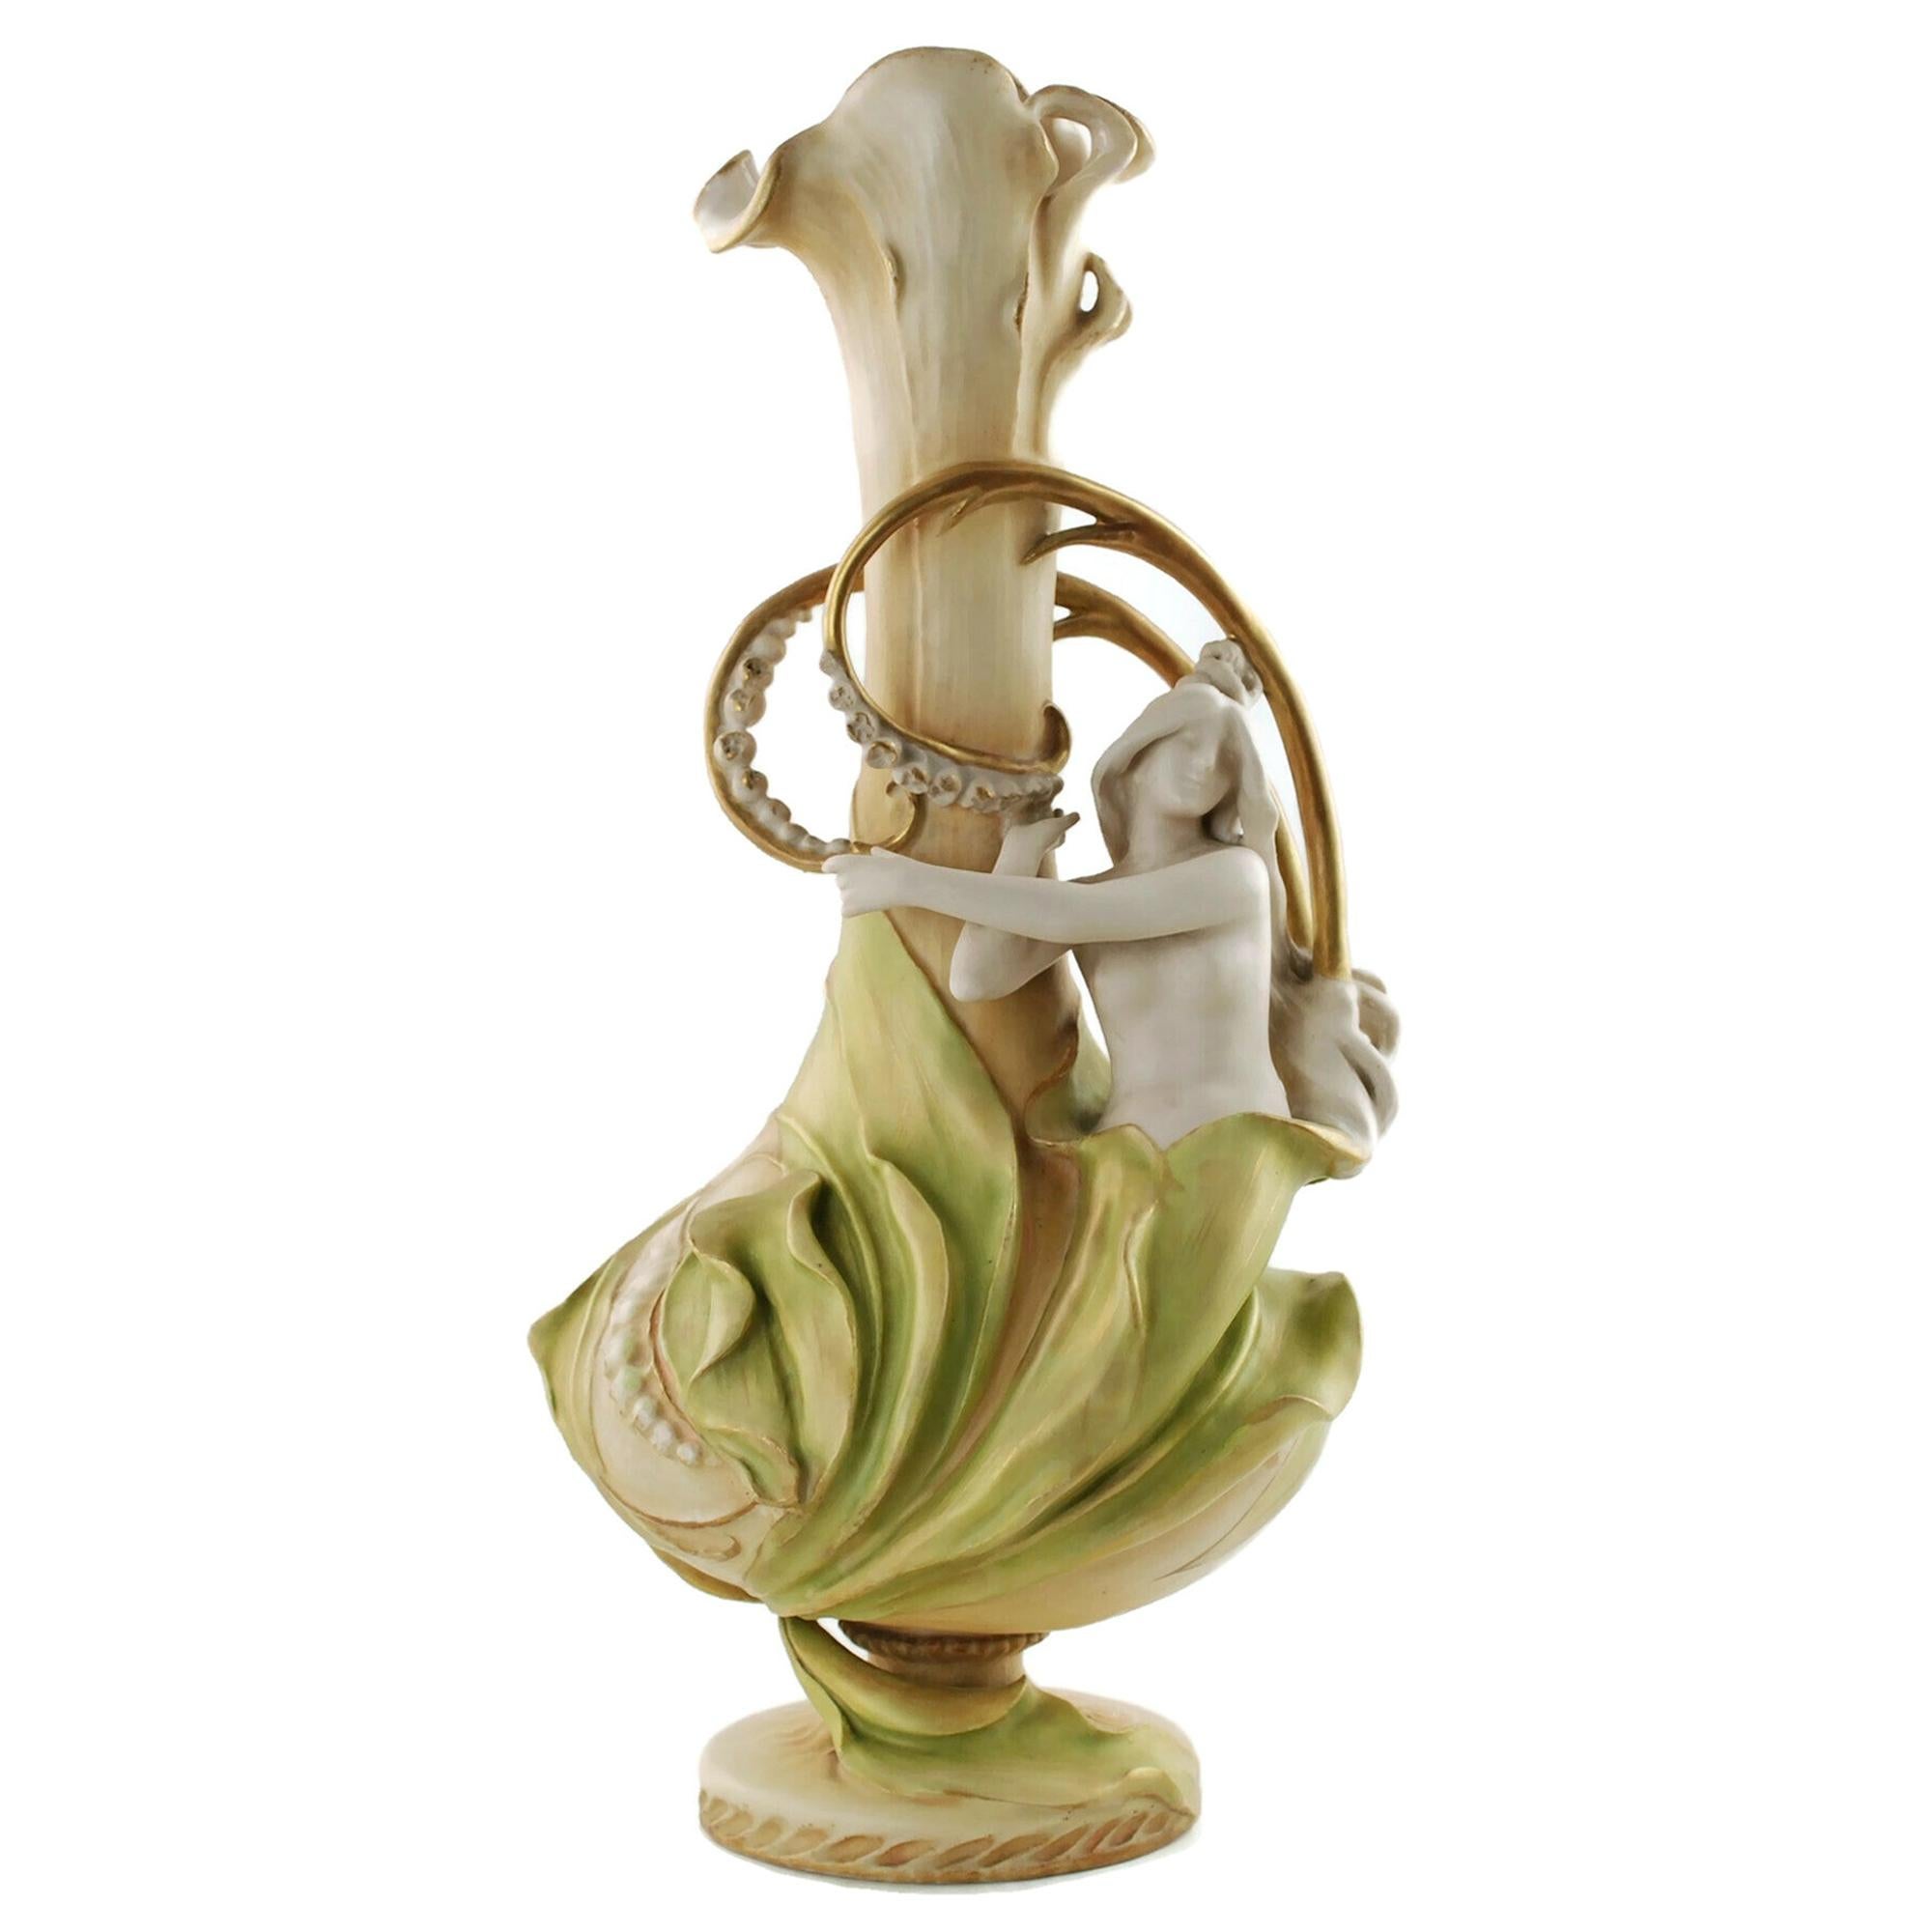 19th Century Eduard Stellmacher for Amphora "Lily of the Valley" Maiden Vase